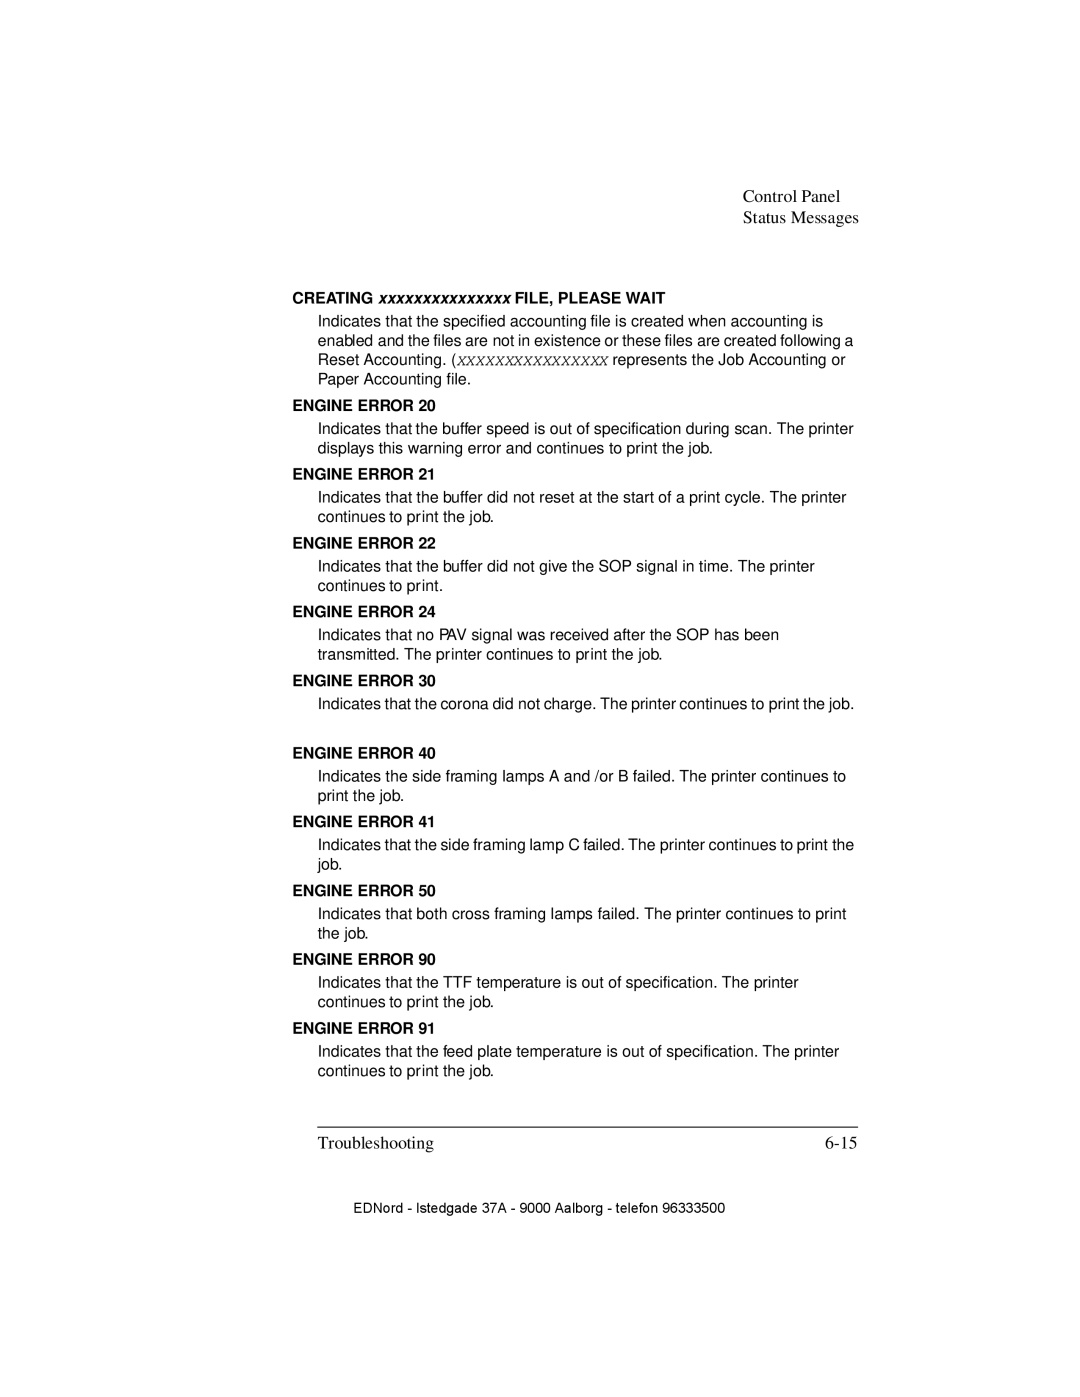 IBM QMS 4525 manual Control Panel Status Messages, Troubleshooting, 6-15 